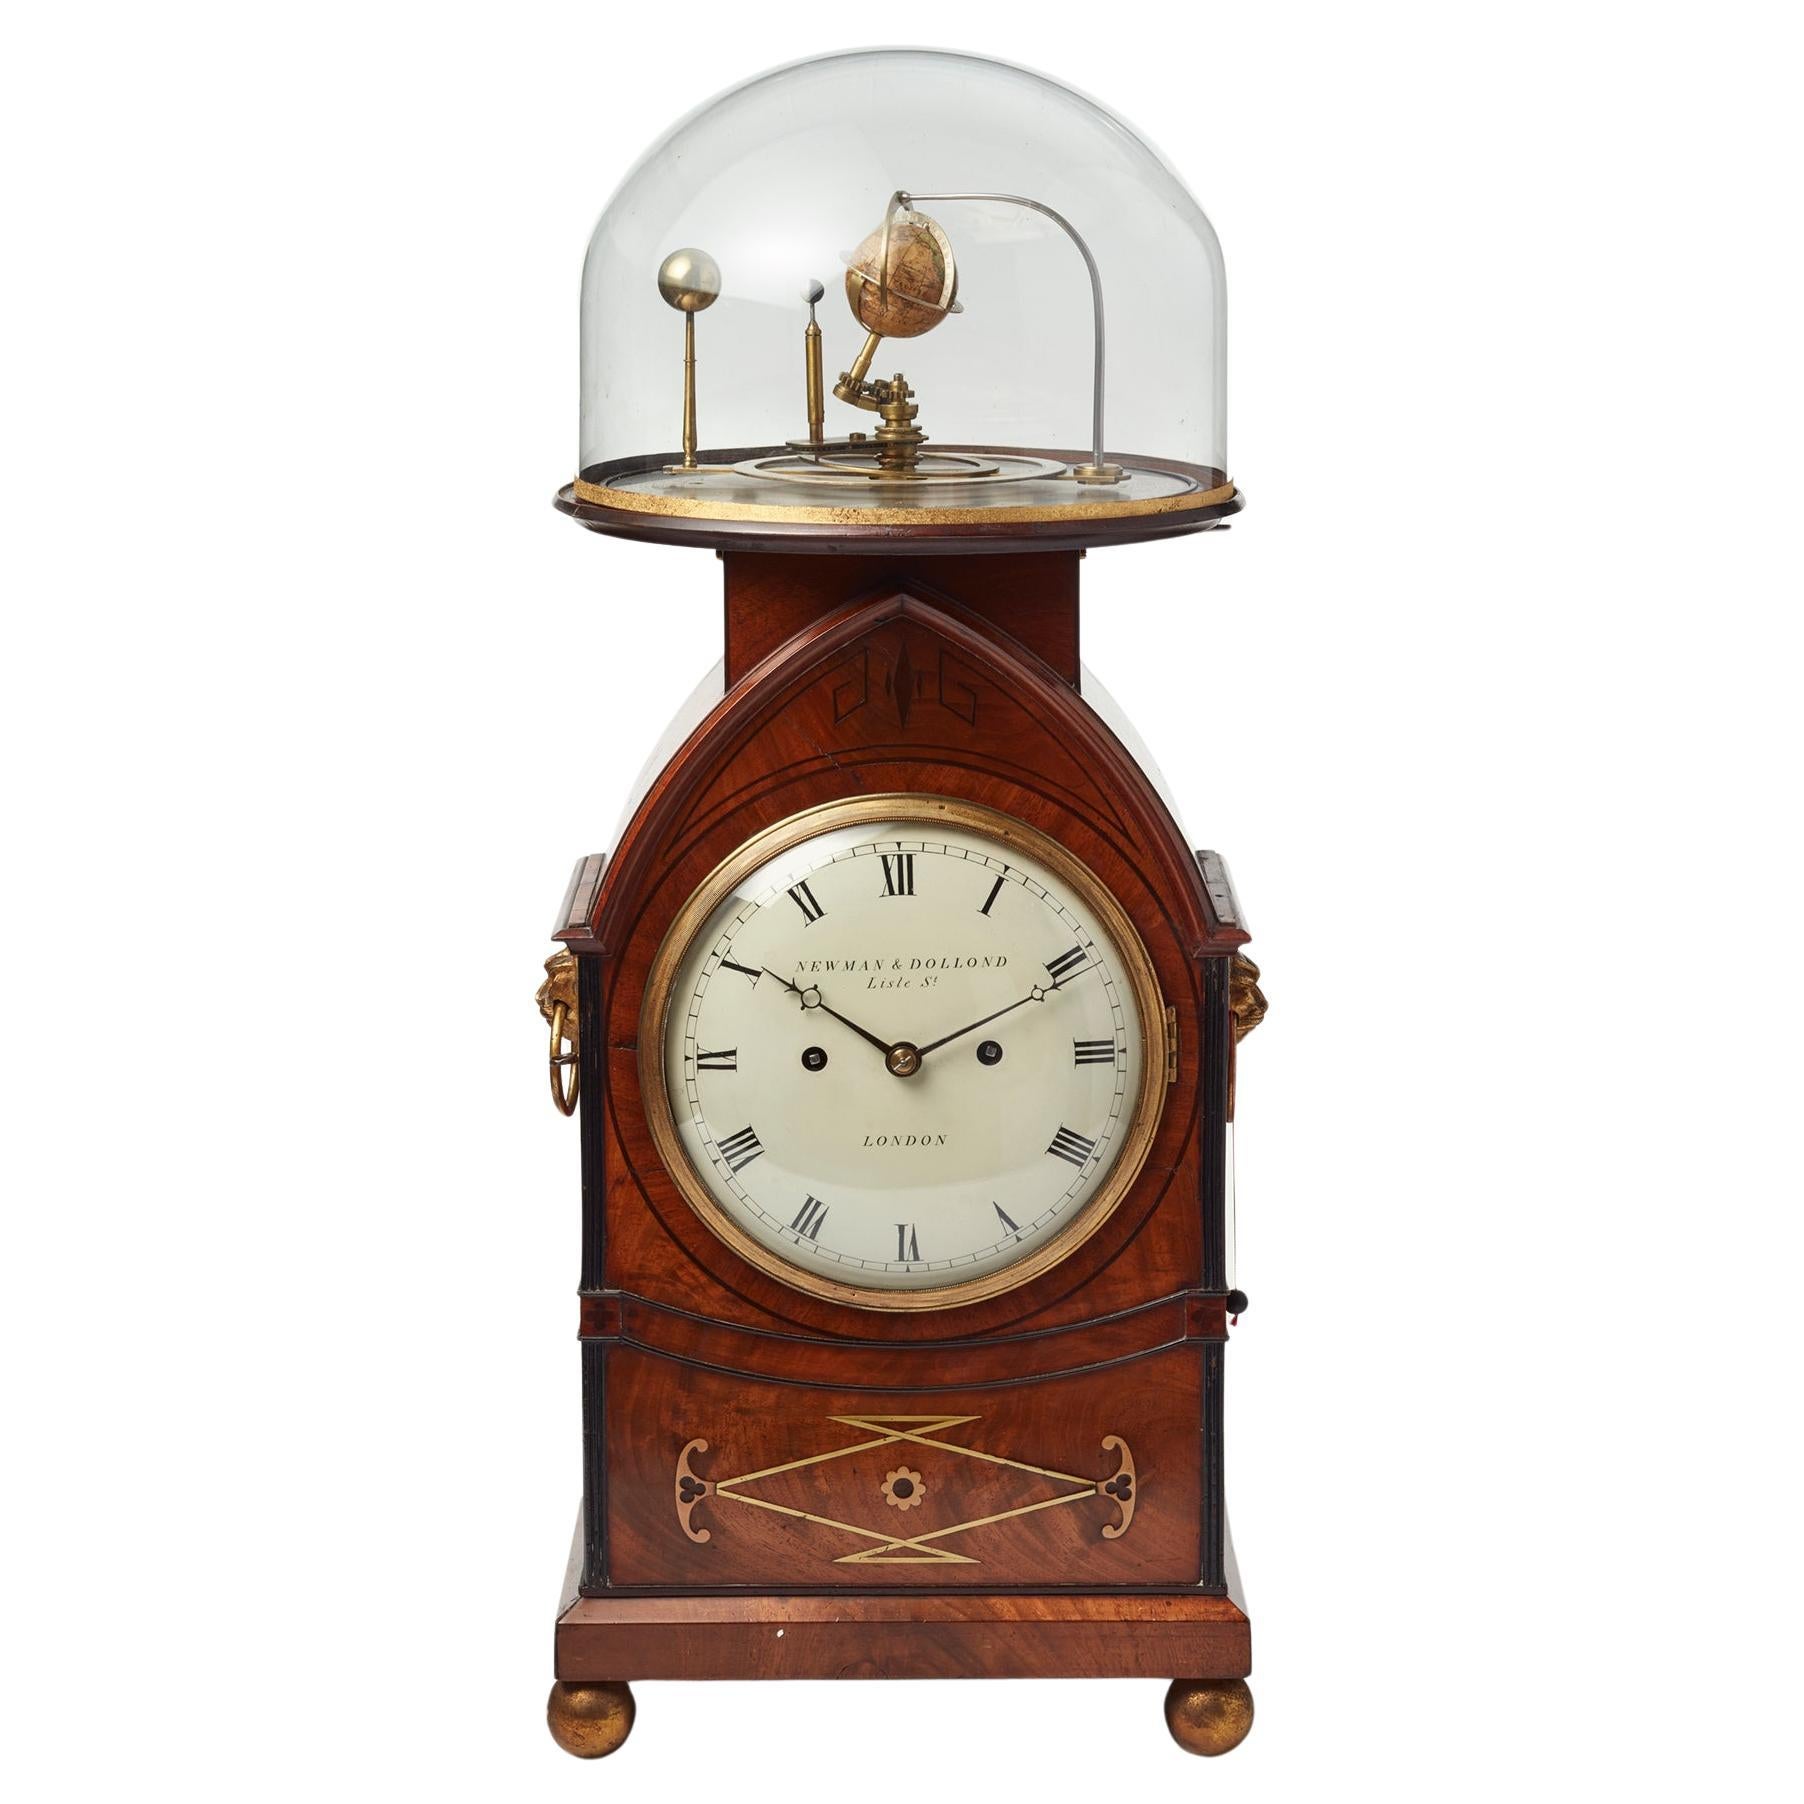 English mahogany bracket clock with Orrery by Newman & Dolland